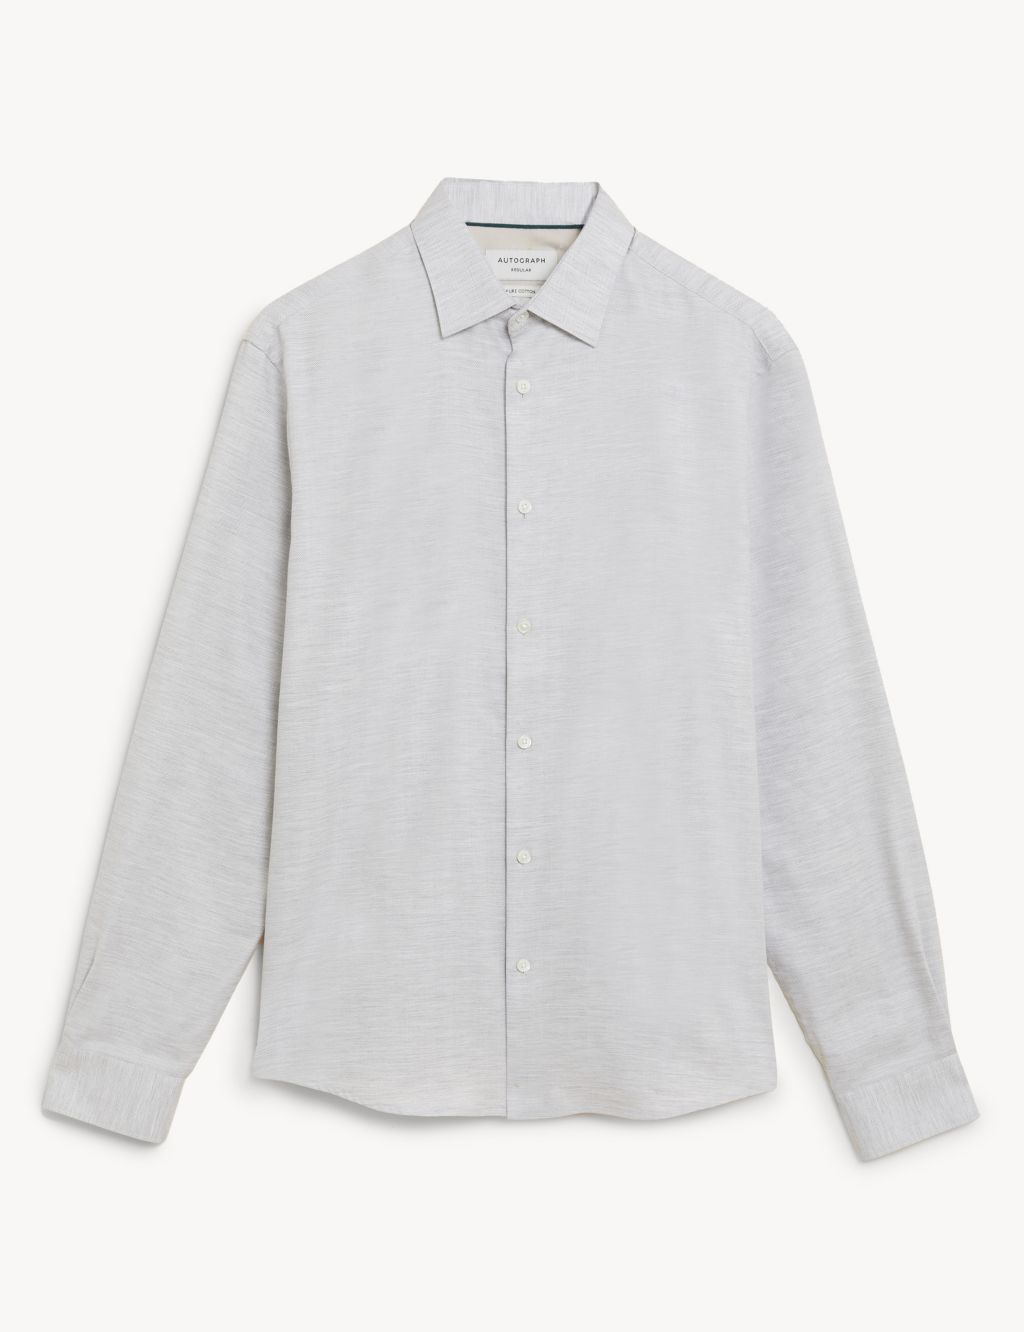 Regular Fit Pure Cotton Herringbone Shirt image 1